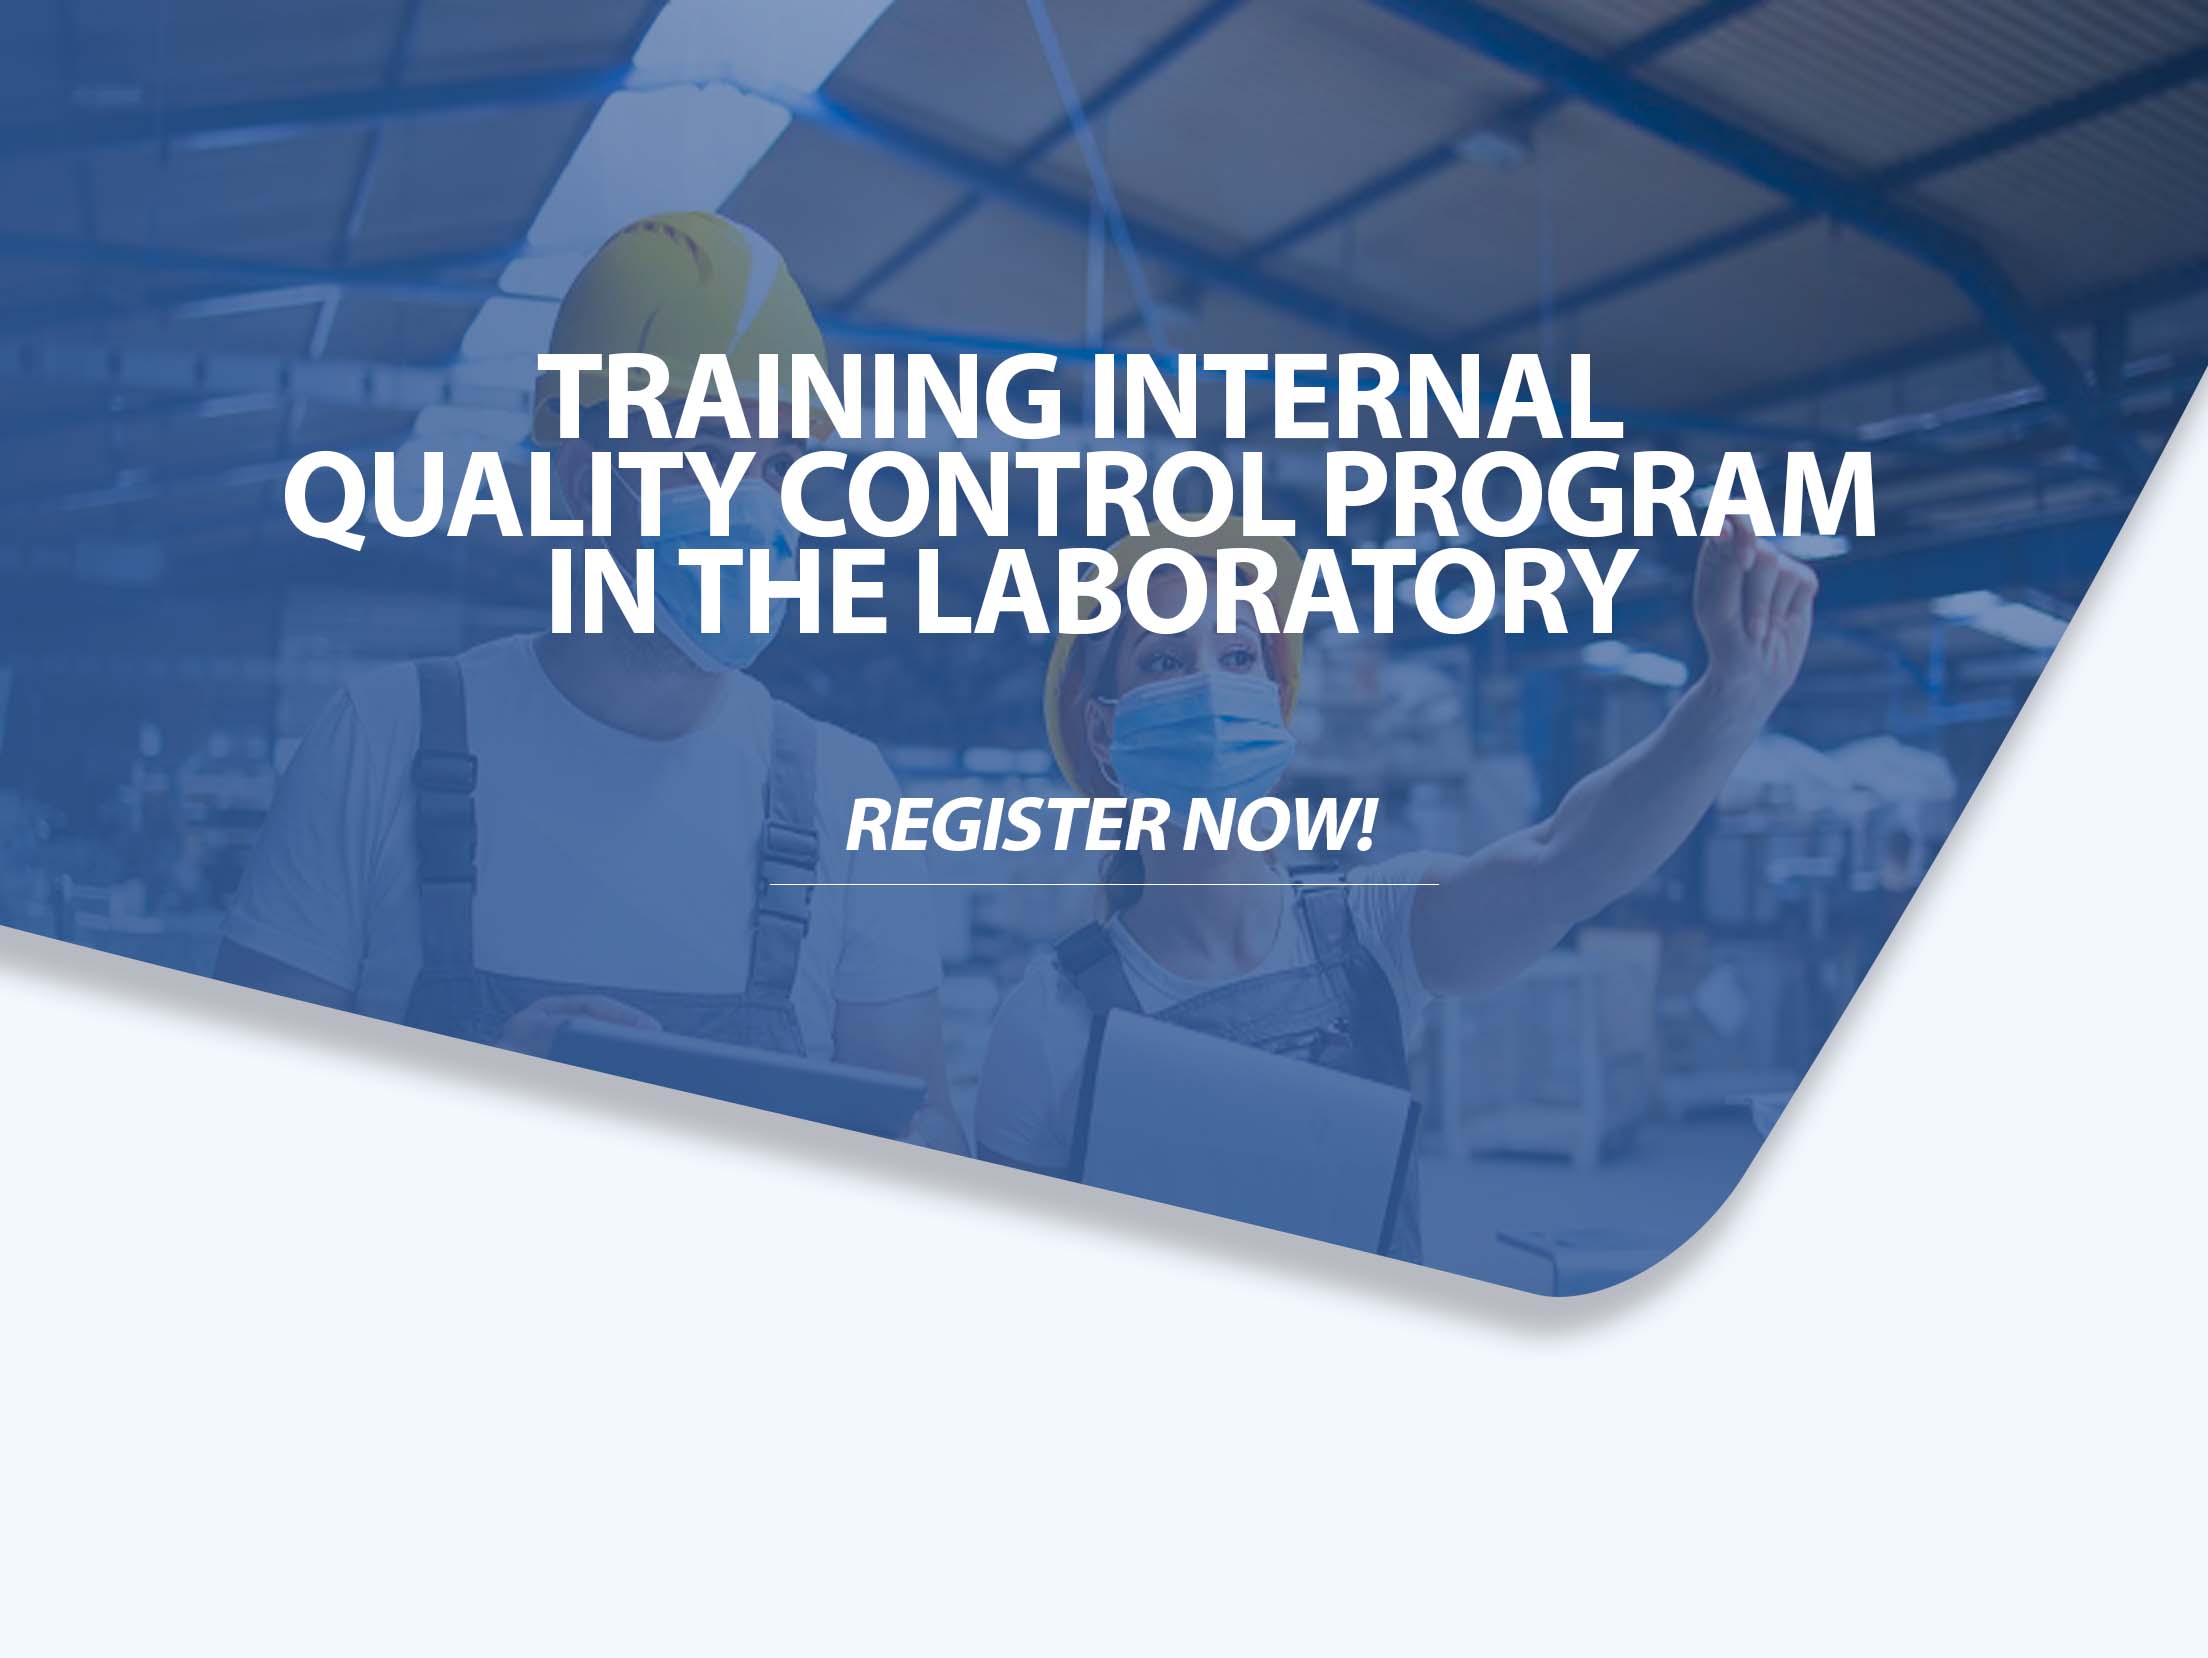 Training Internal Quality Control Program in the Laboratory